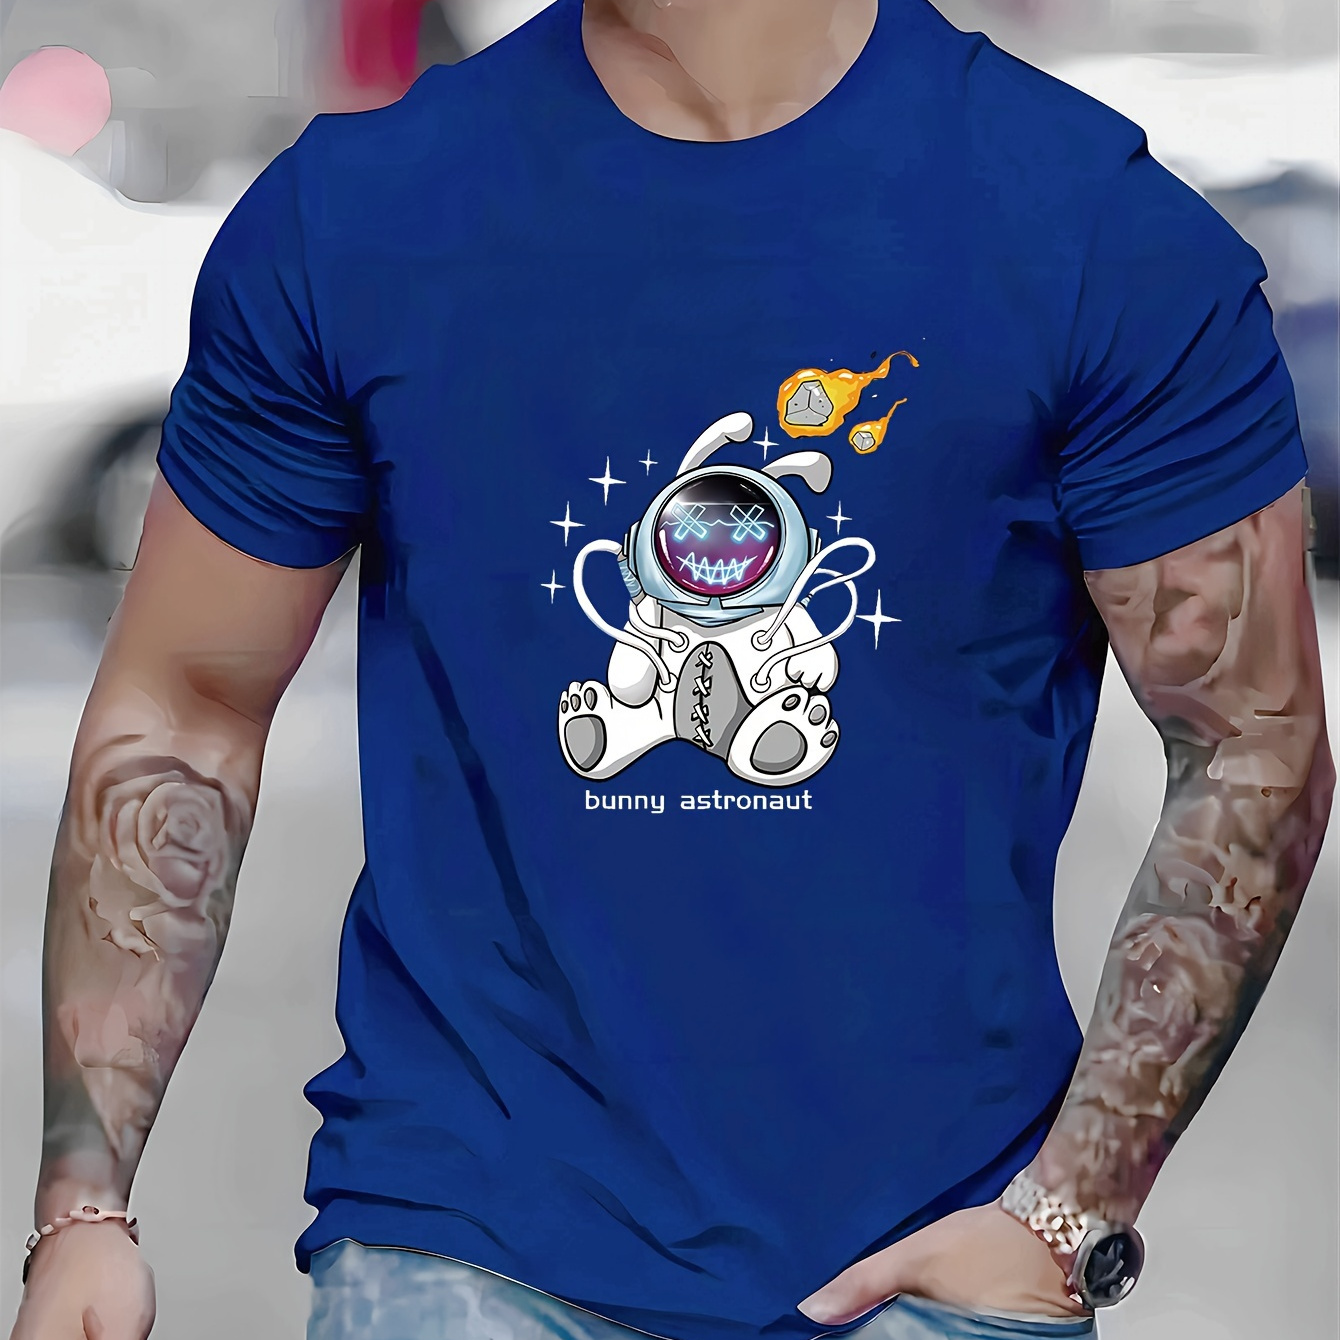 

Nasa Astronaut Print, Men's Graphic T-shirt, Casual Comfy Tees For Summer, Mens Clothing